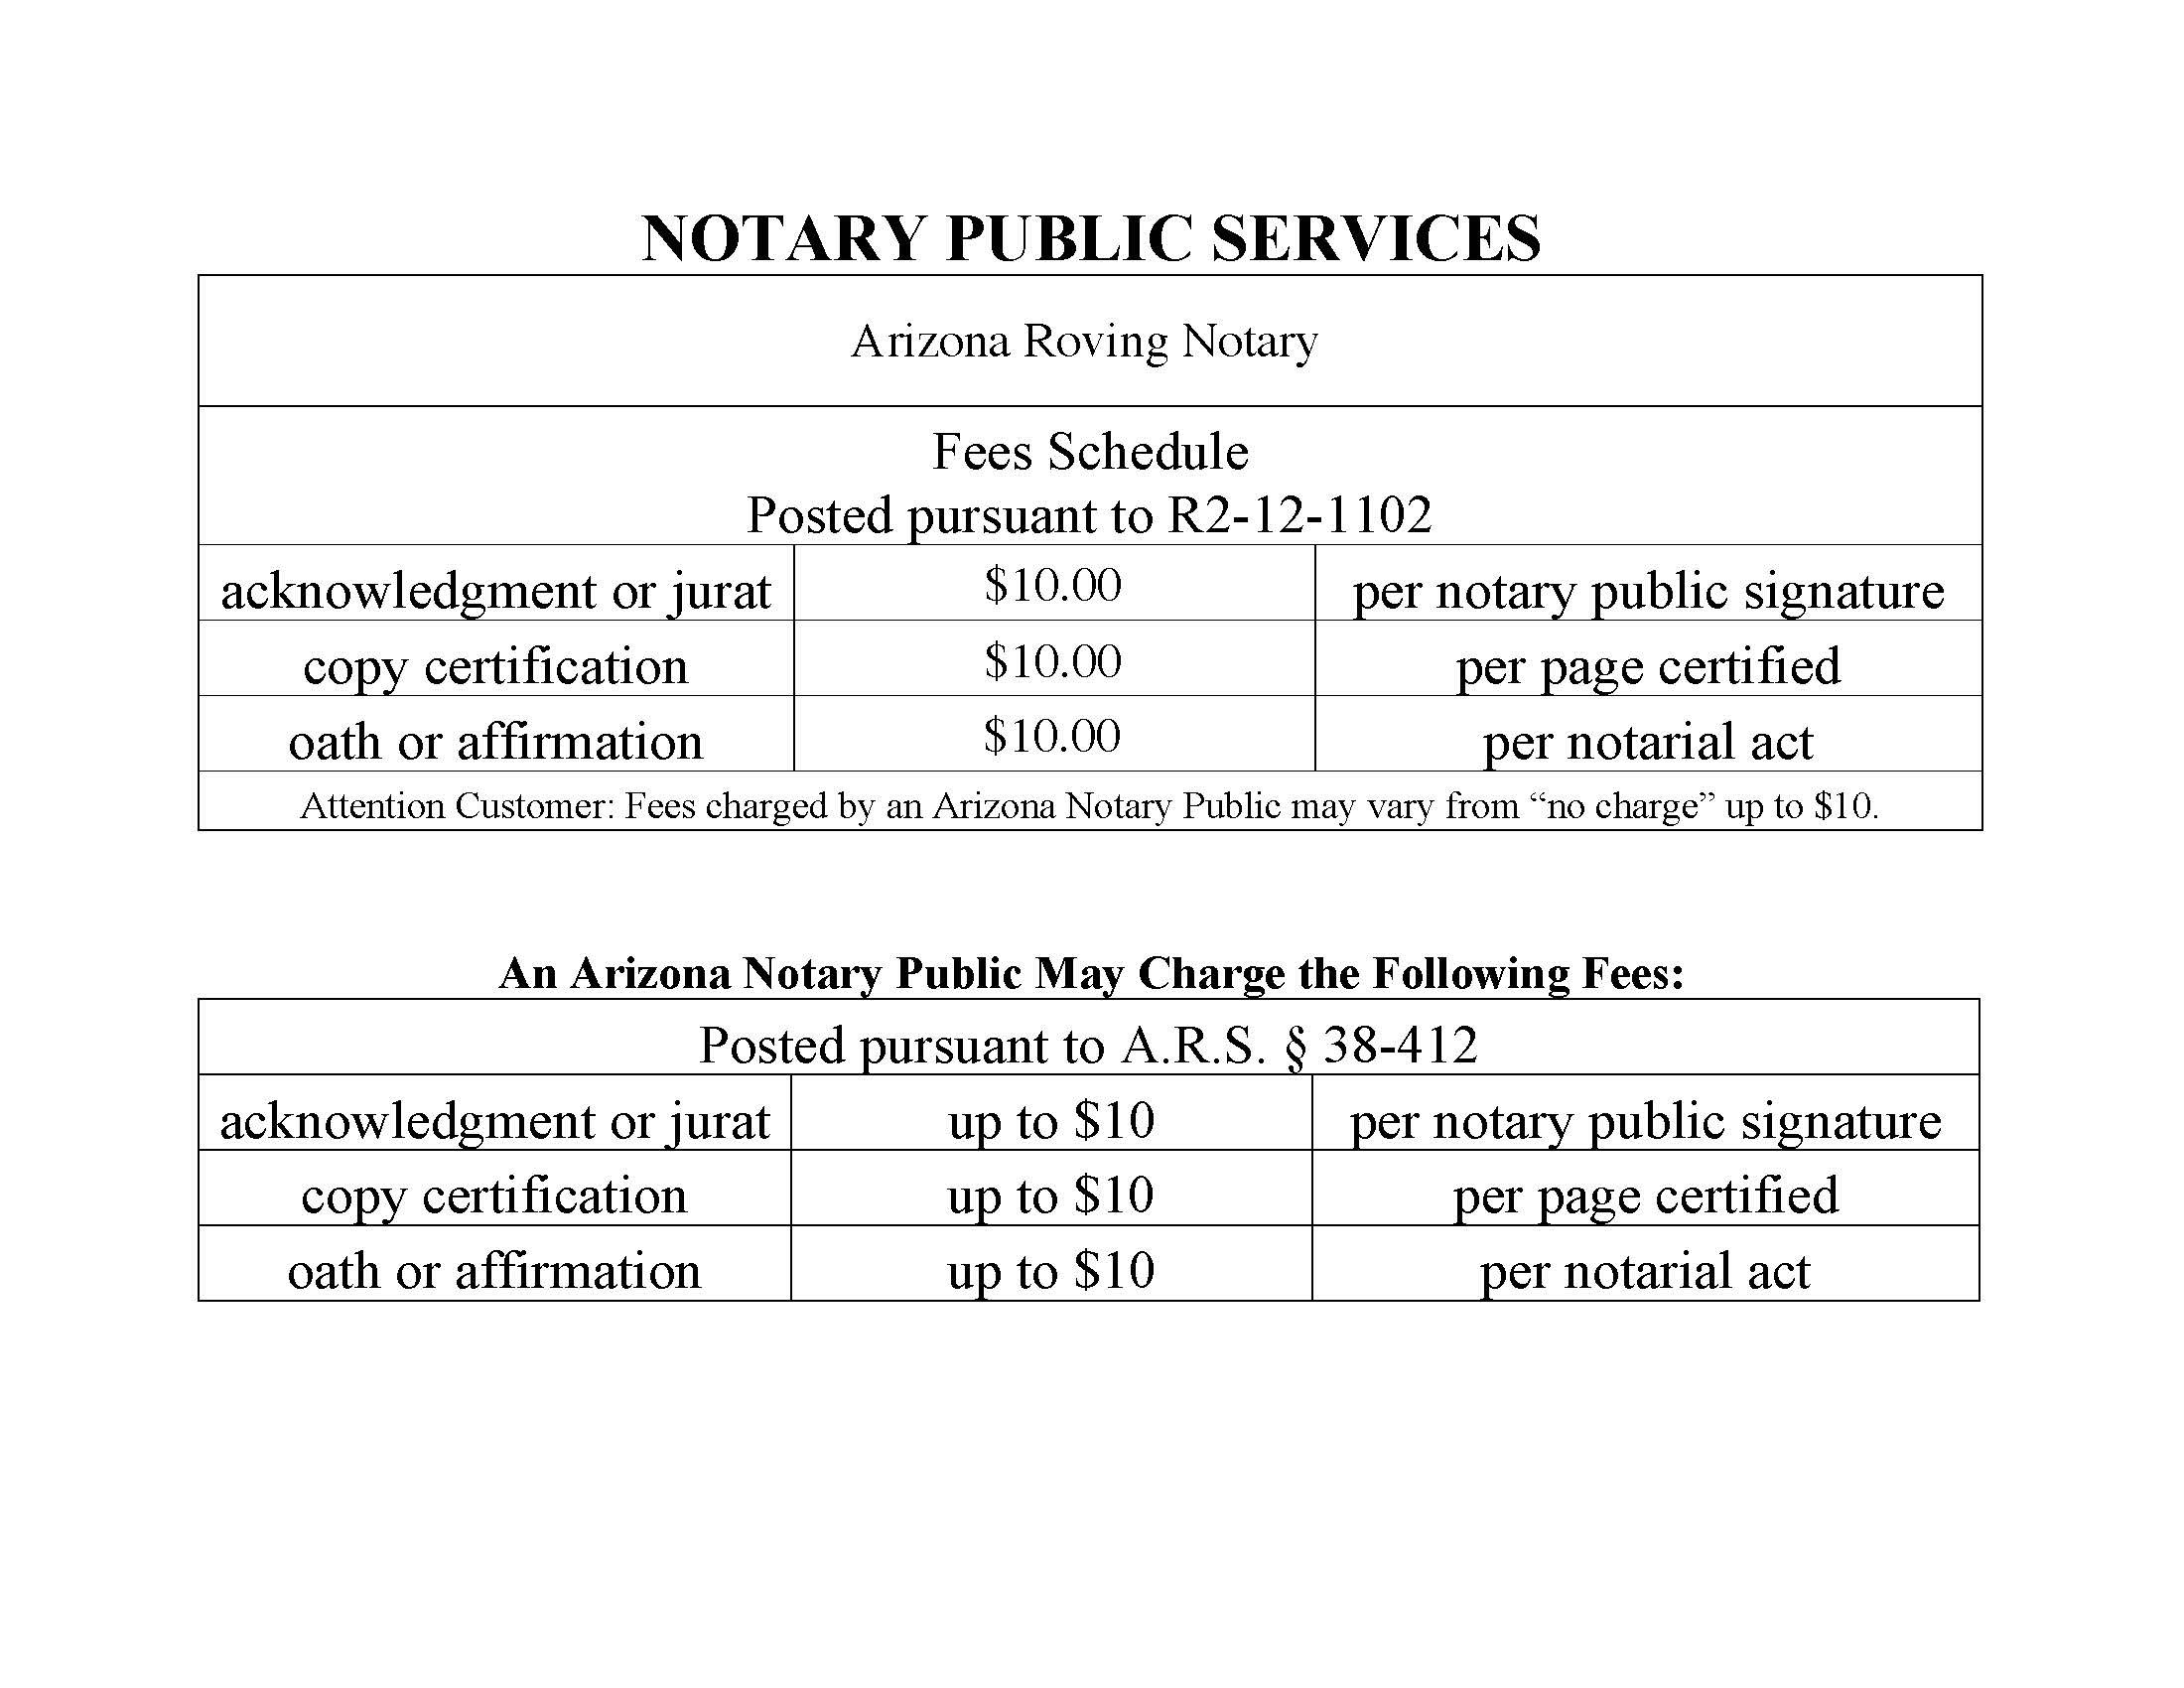 az-regulated-fee-schedule-for-az-roving-notary